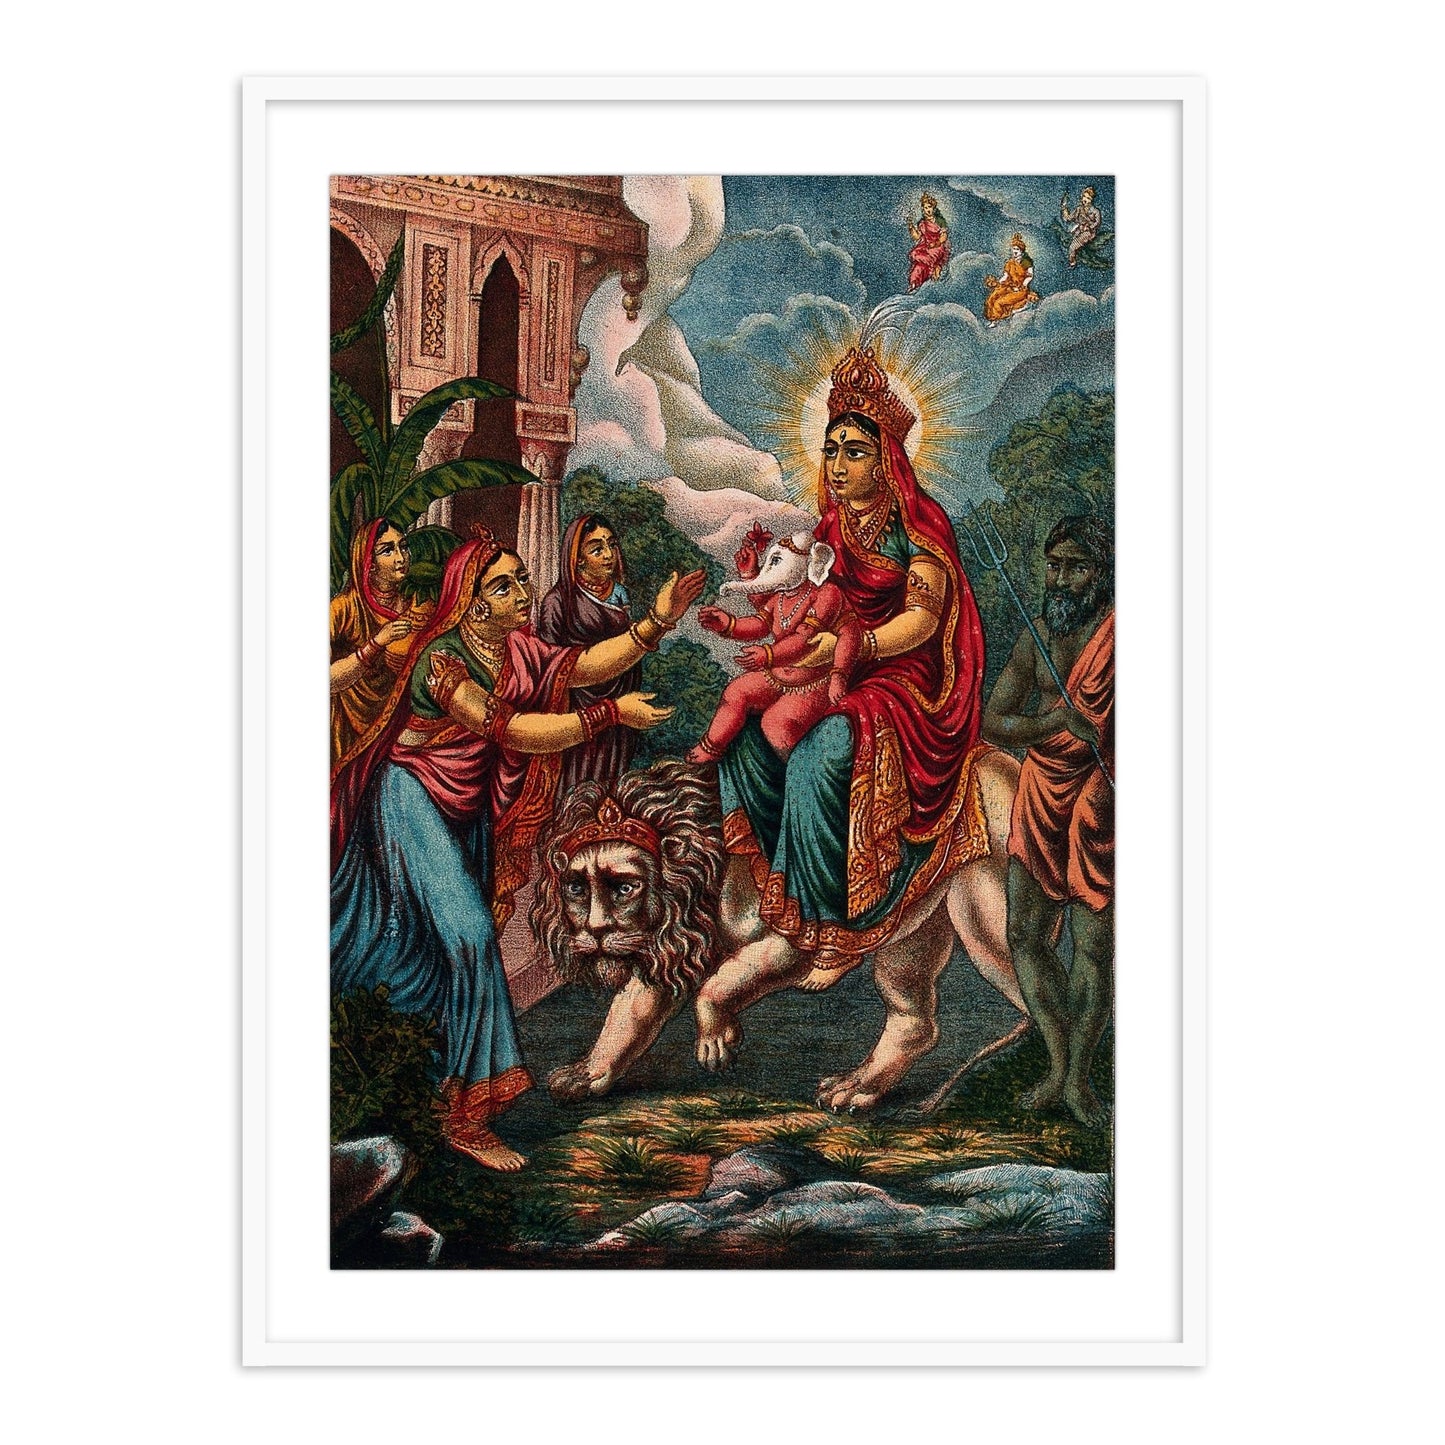 Parvati as Durga Riding on a Lion